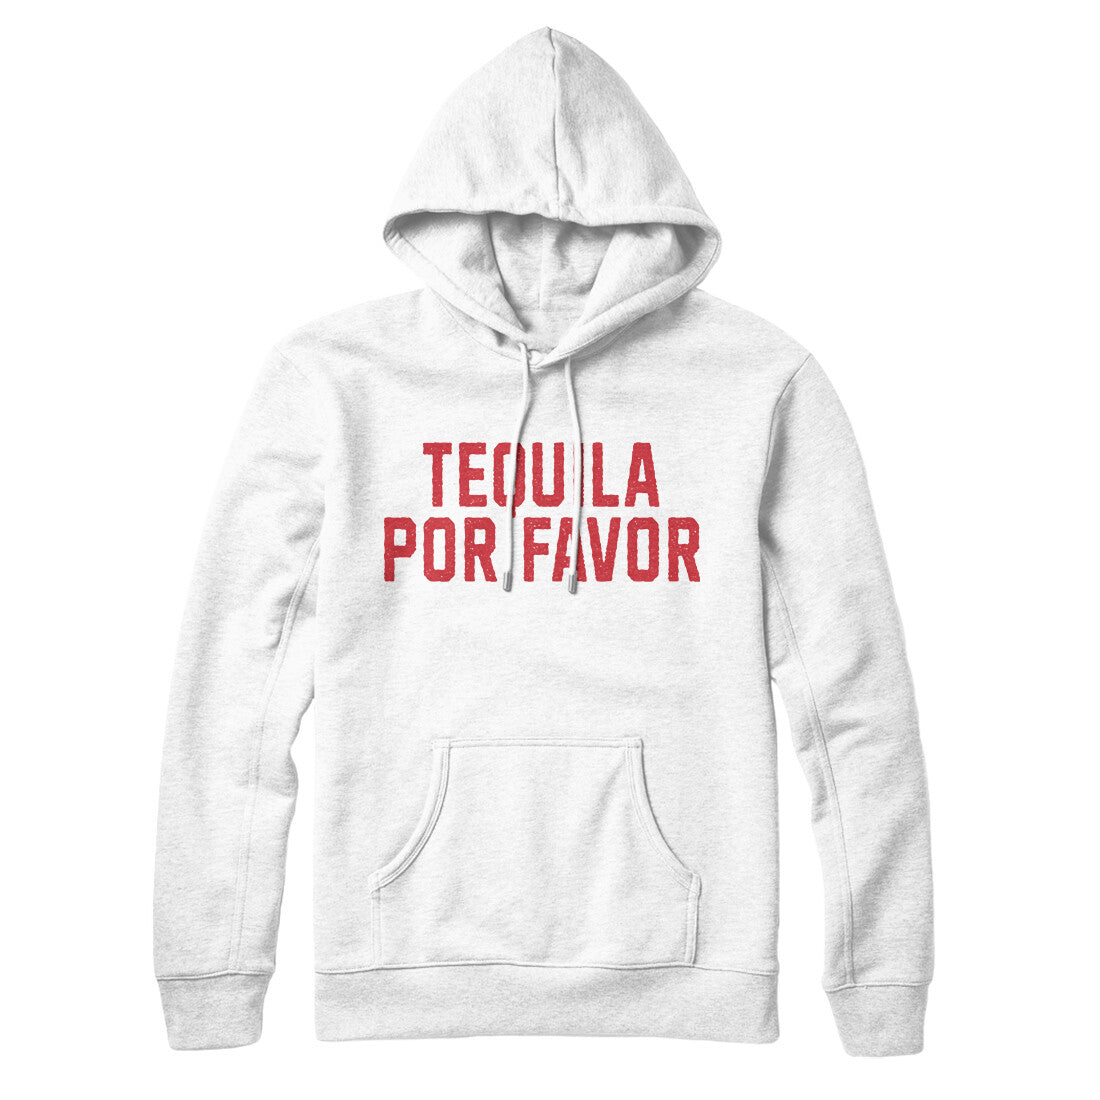 Tequila Por Favor in White Color